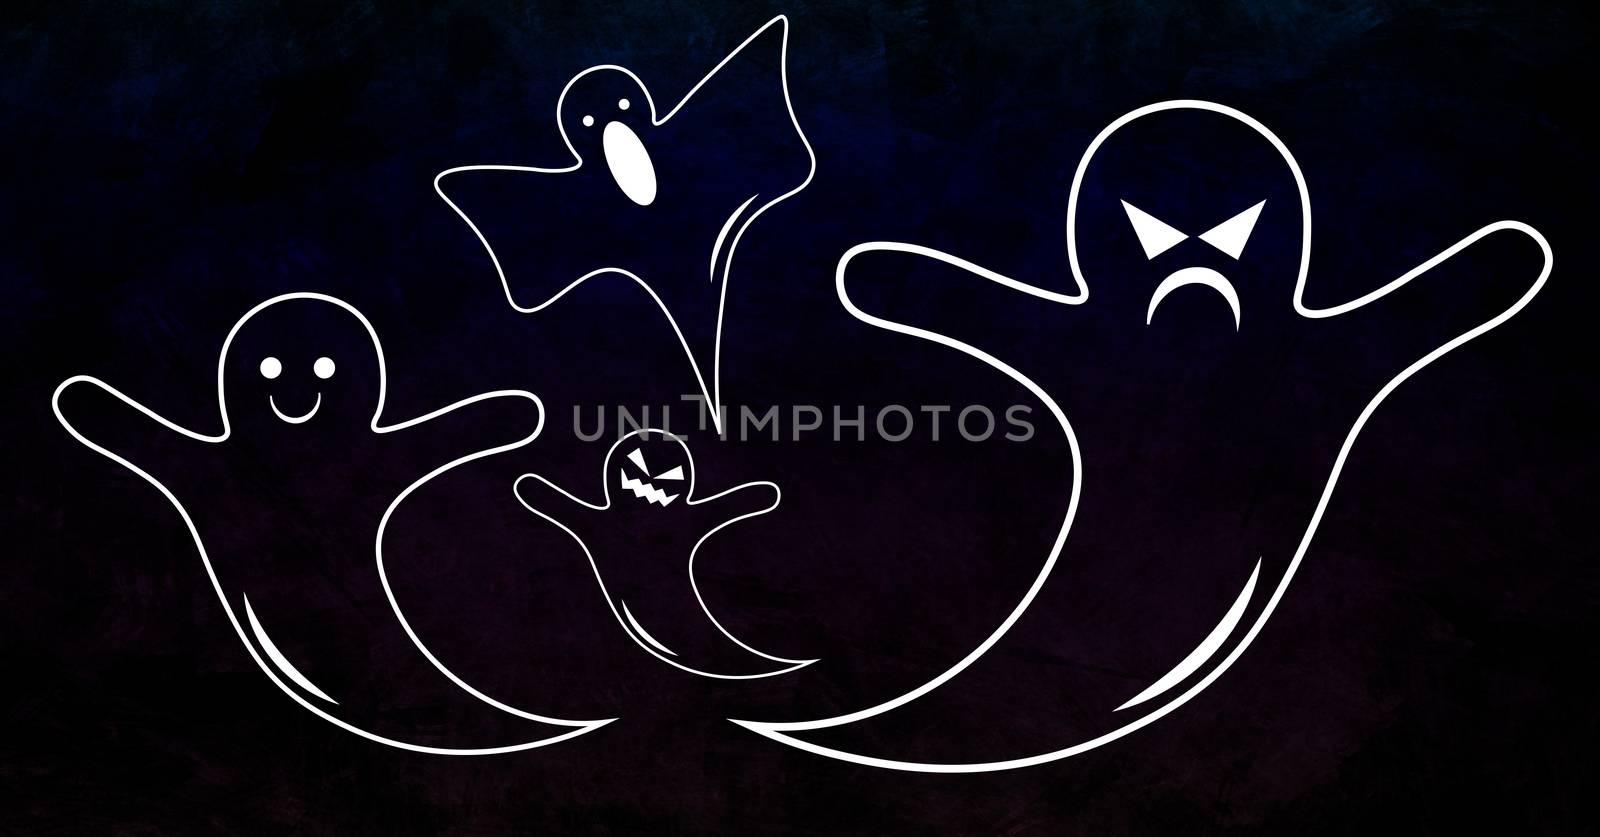 Ghost halloween illustrations by Wavebreakmedia